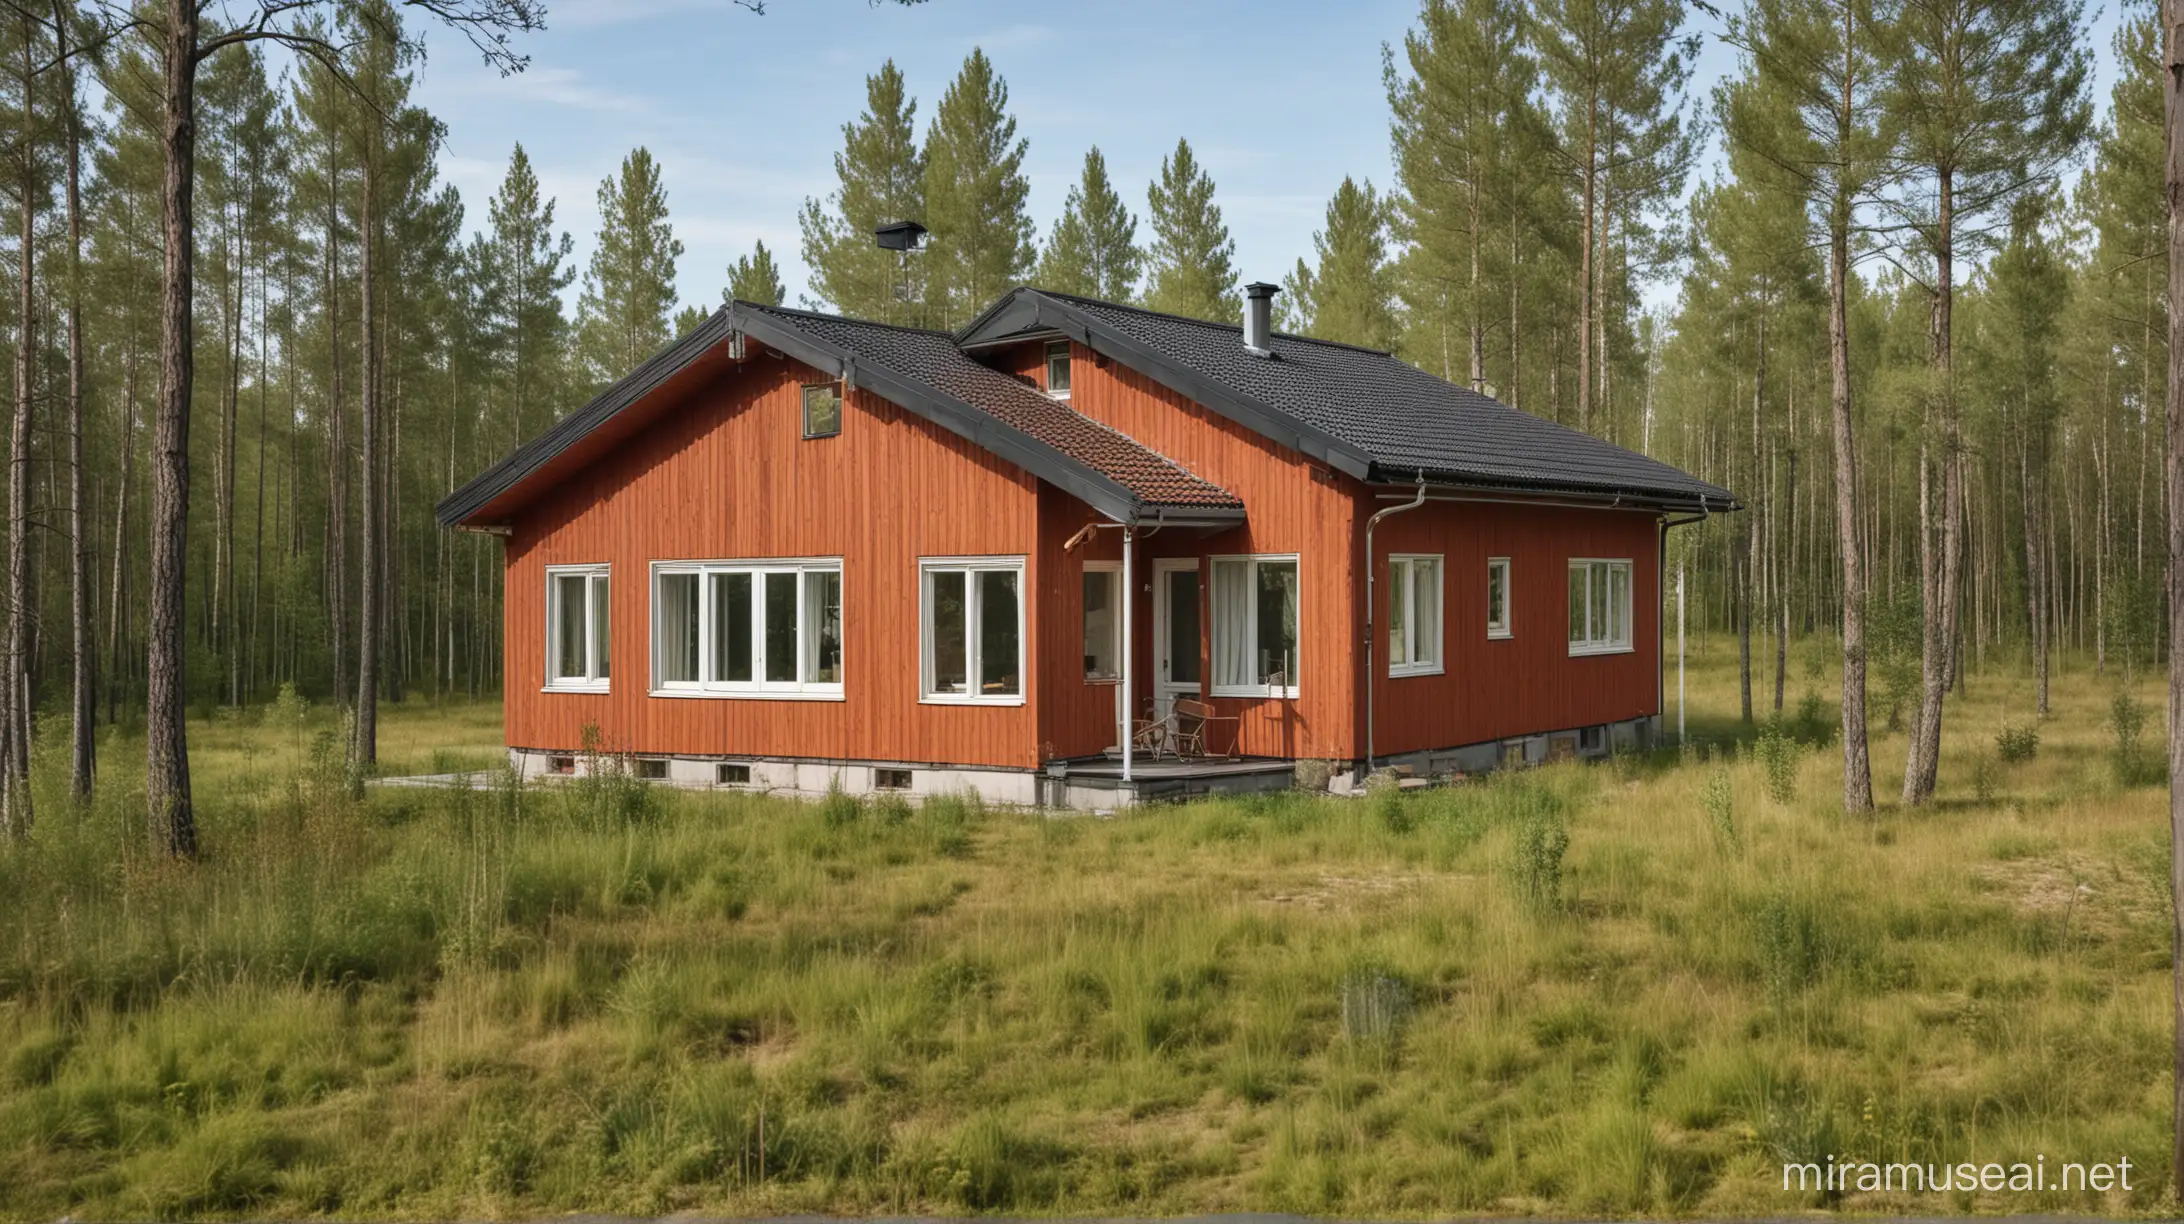 Charming Red Wooden SingleStorey House in Finnish Rural Landscape